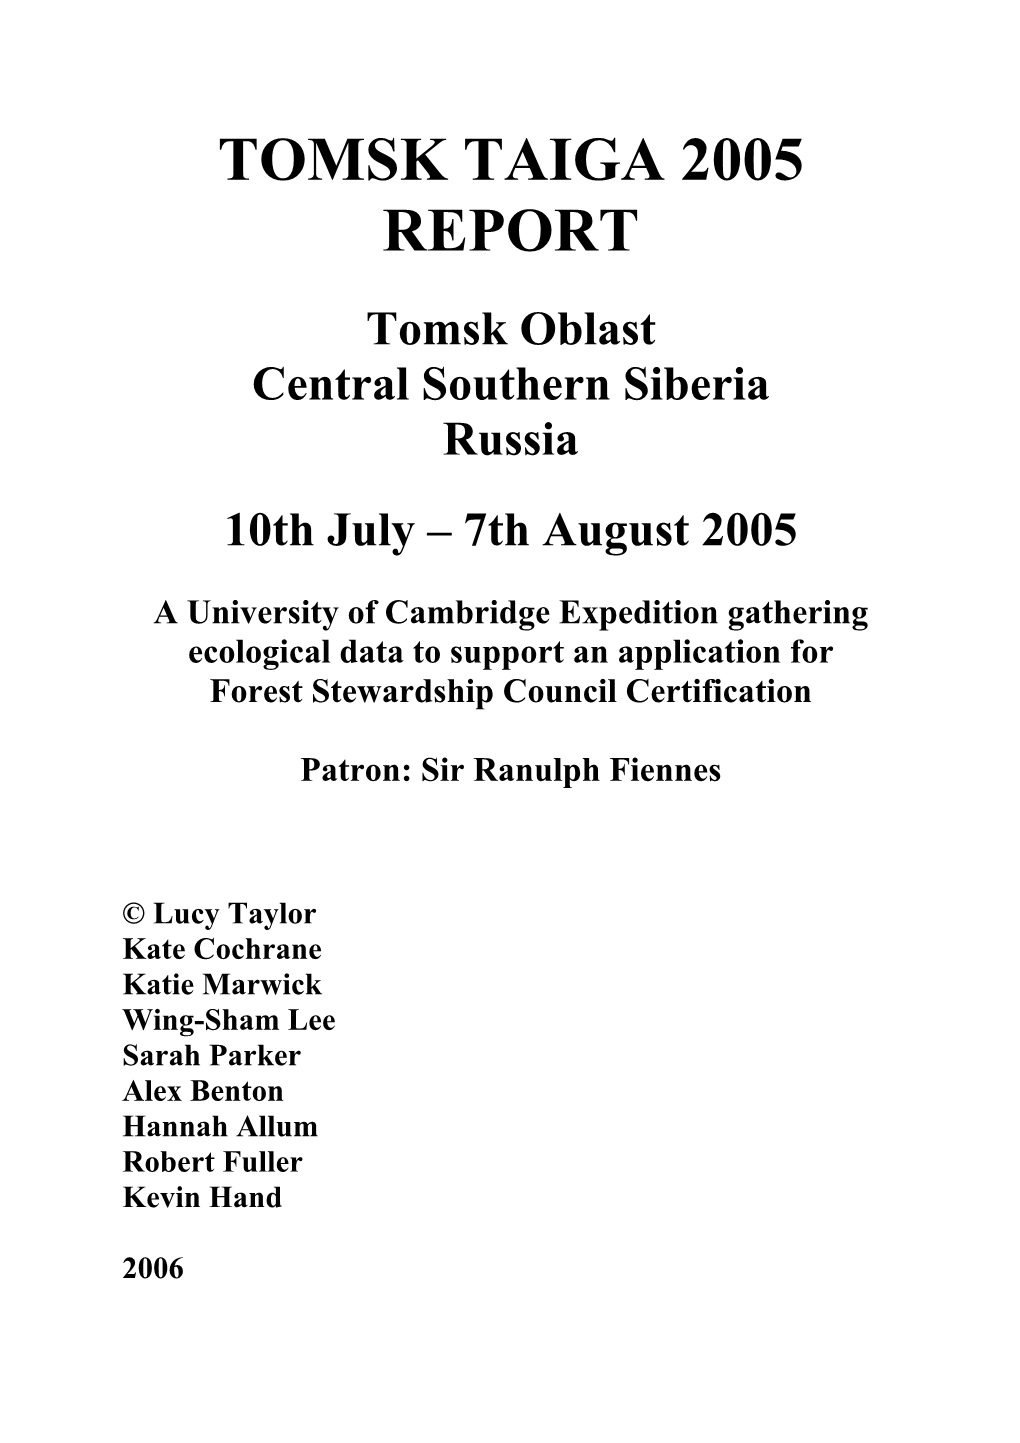 02B. Tomsk Taiga 2005 Report